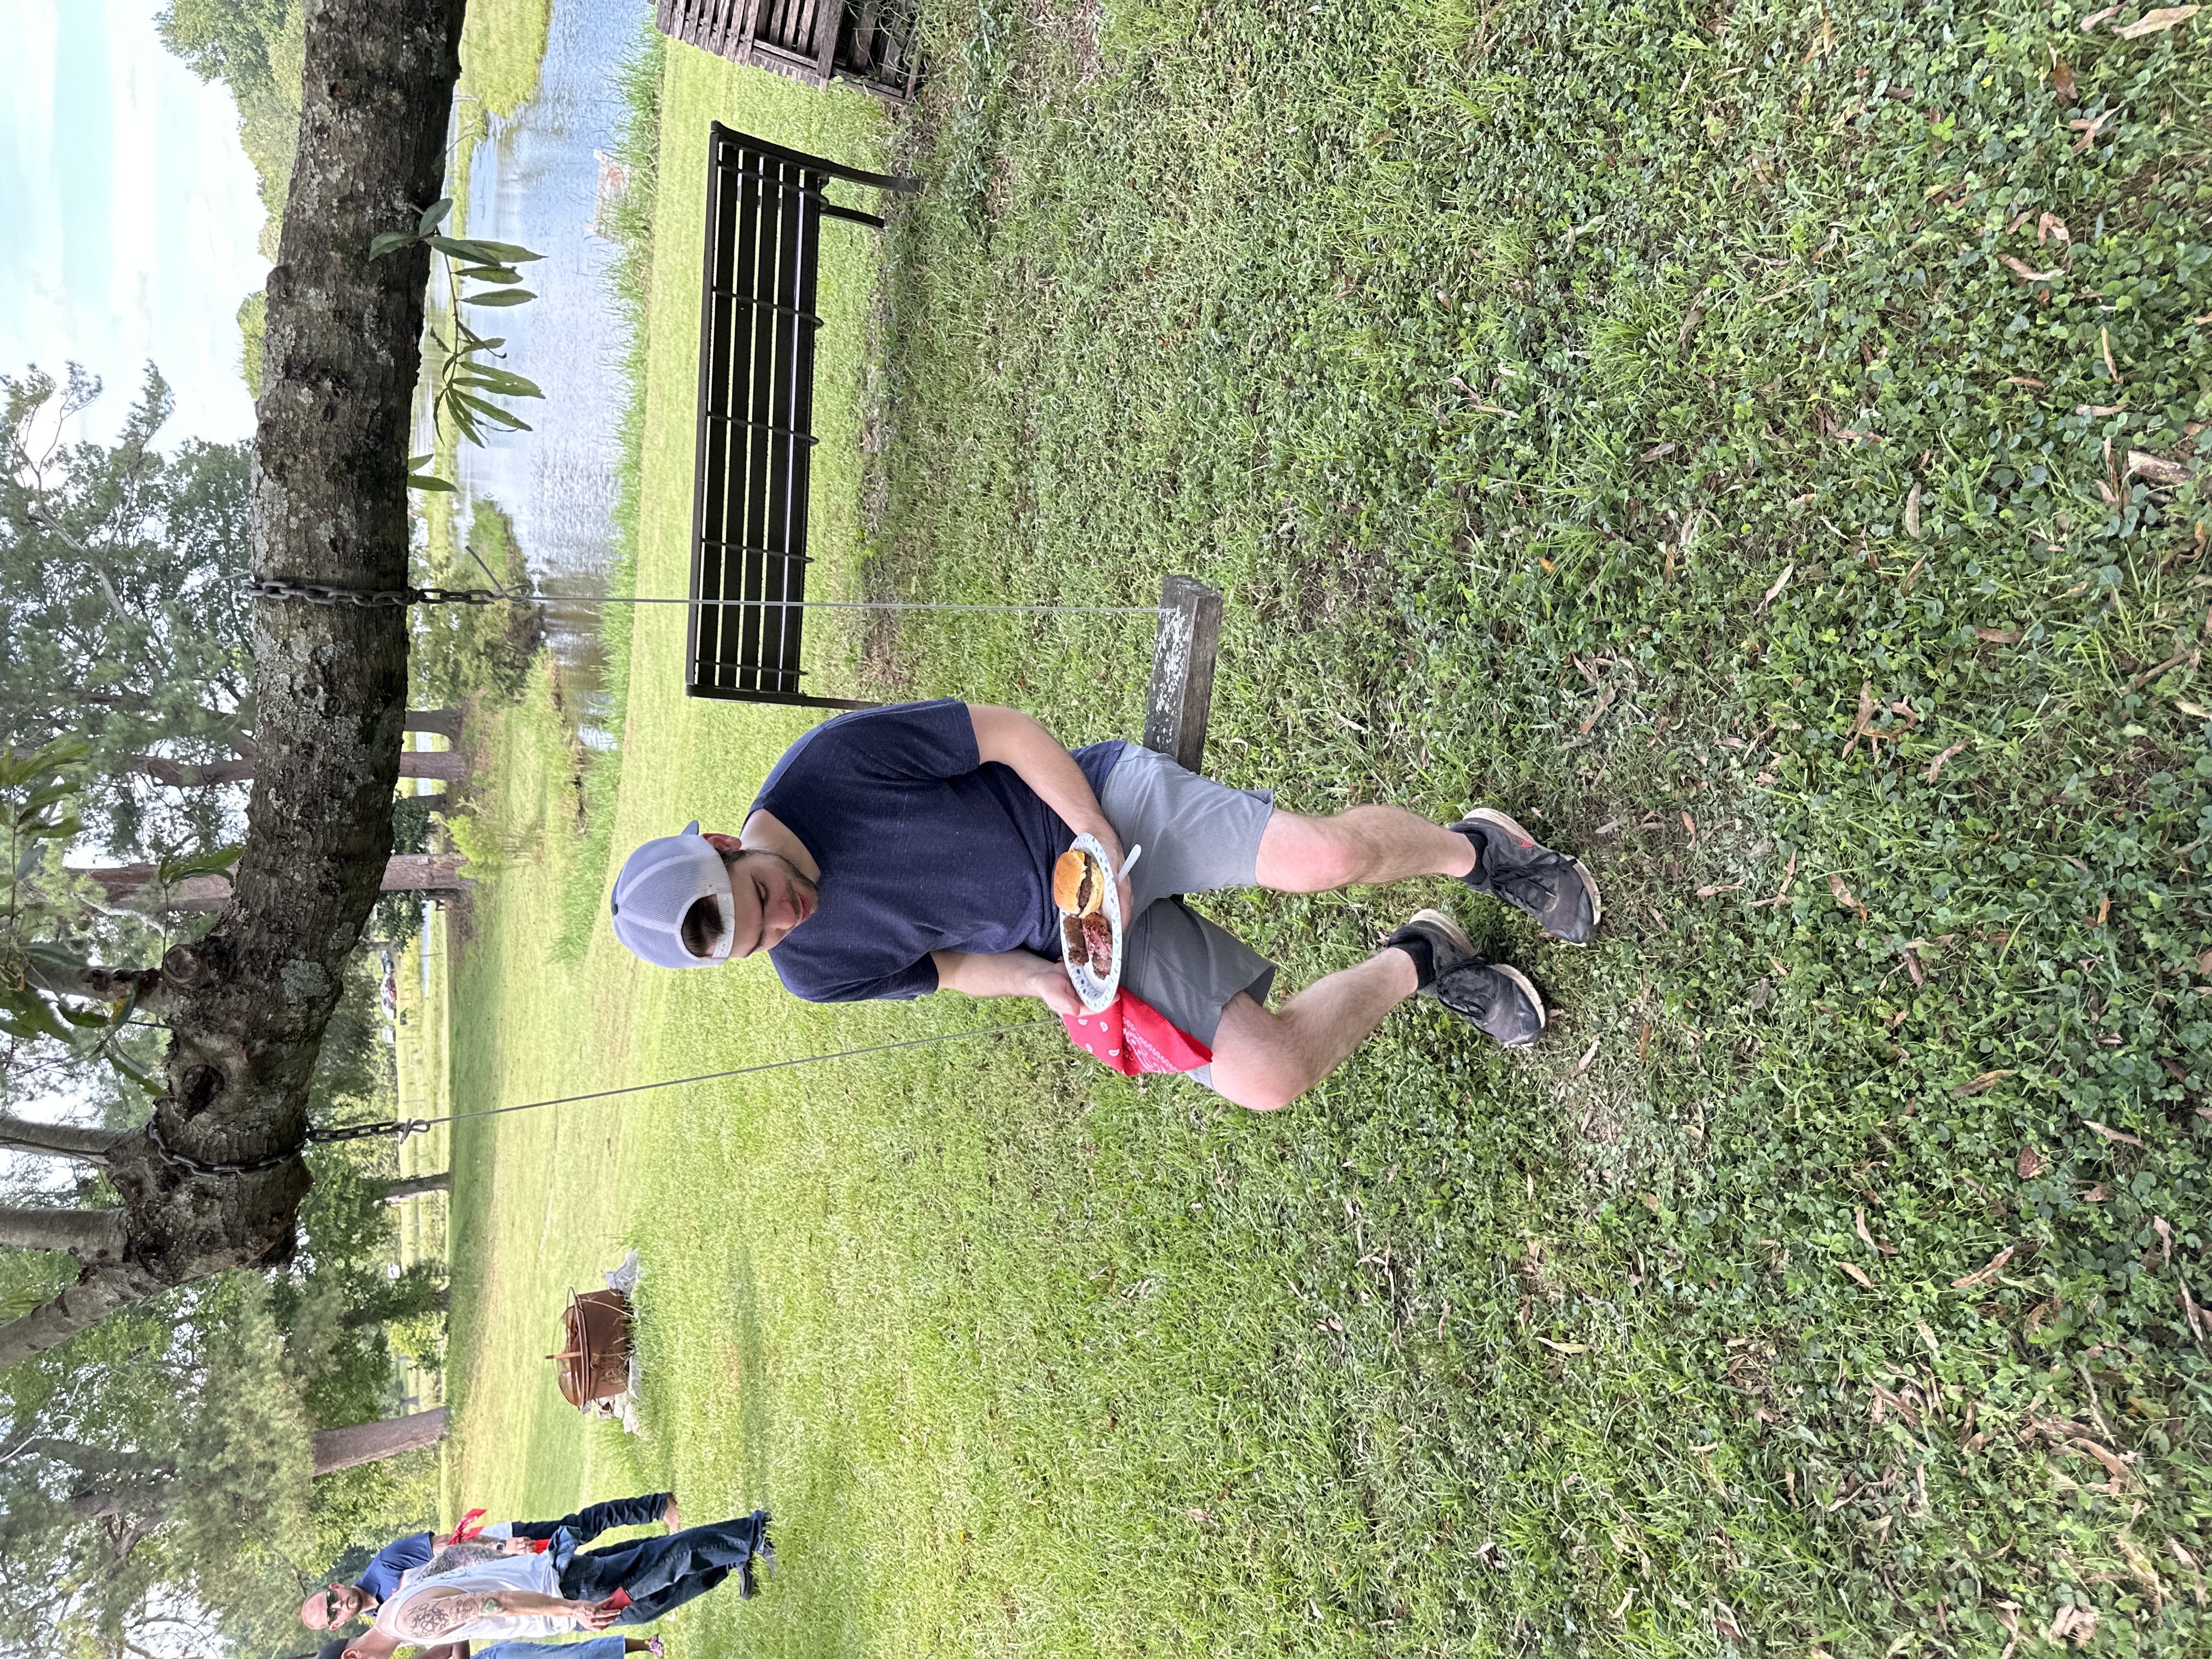 A team member on a swing